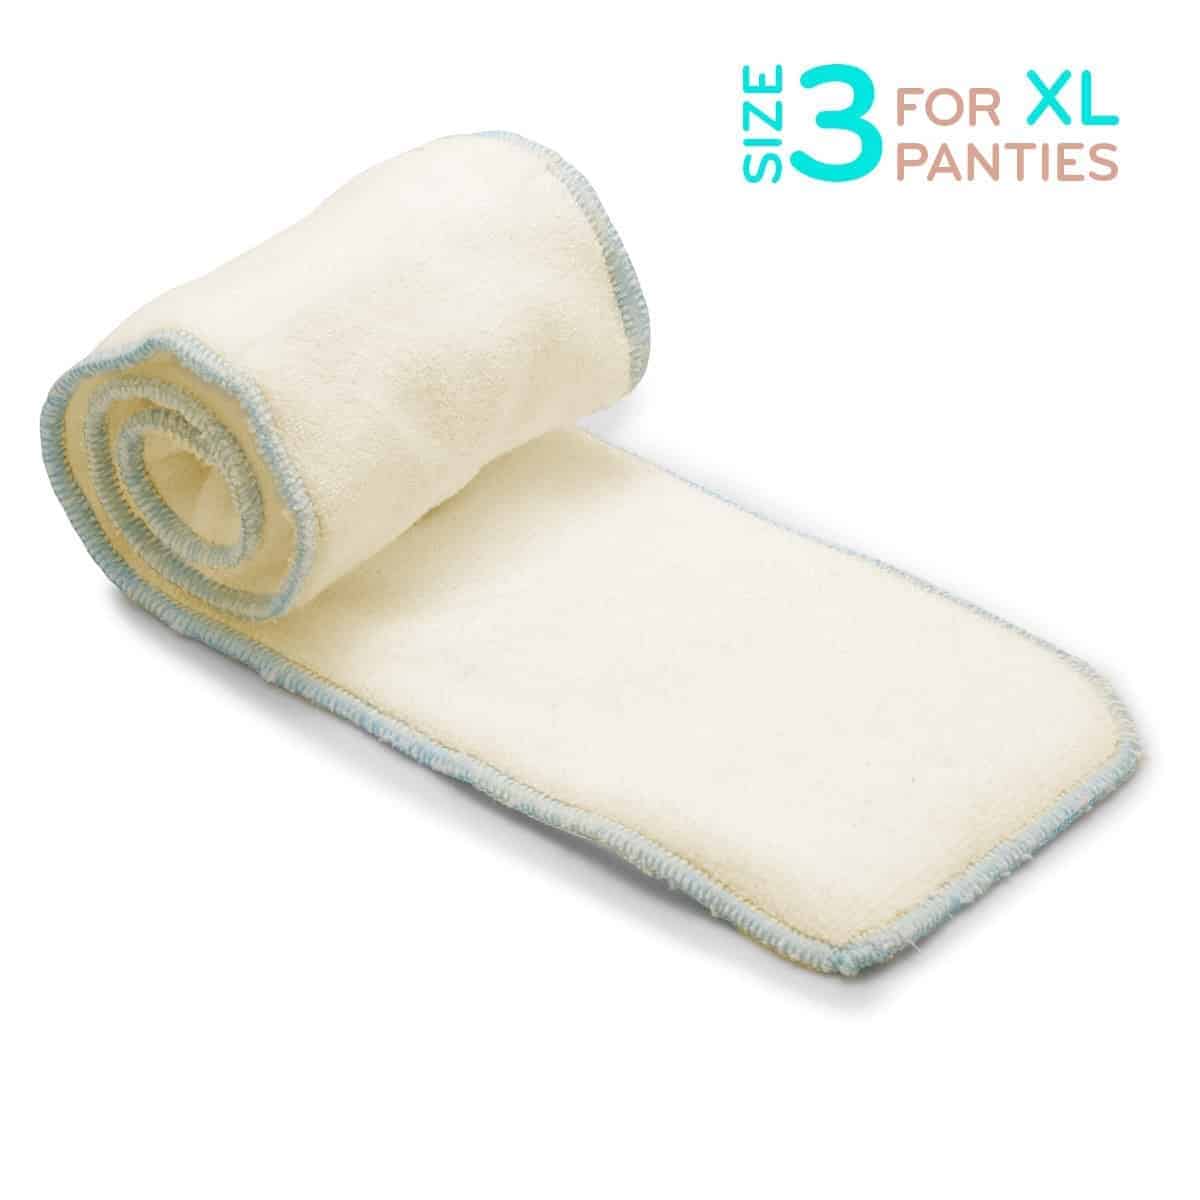 Hemp cotton inserts Cloth nappies - 3 pieces